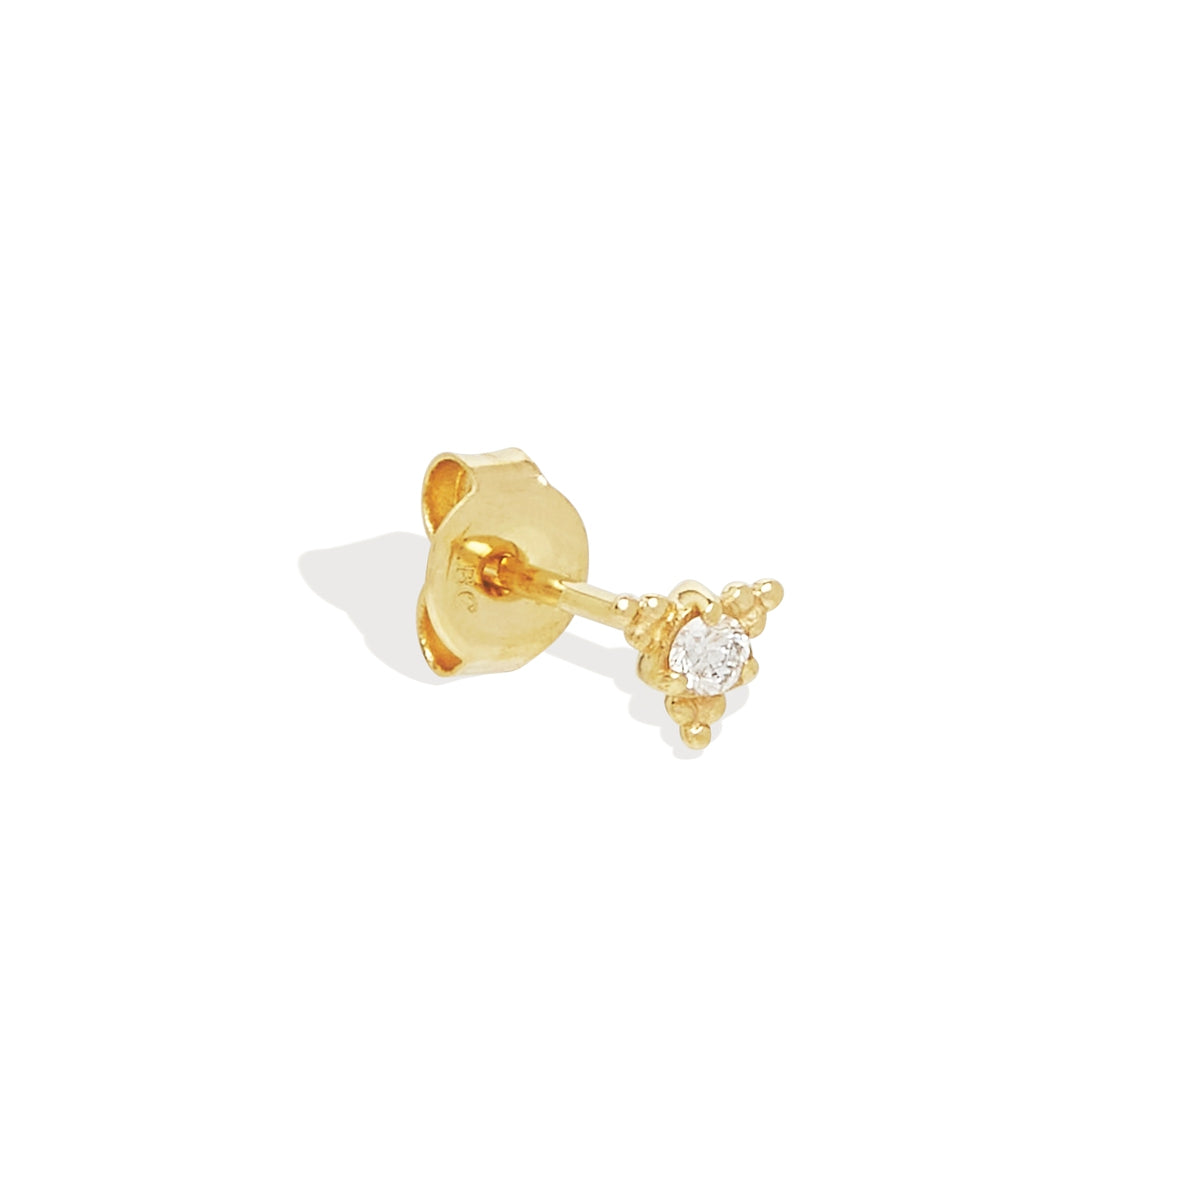 By Charlotte 14k Gold Awaken Diamond Single Stud Earring